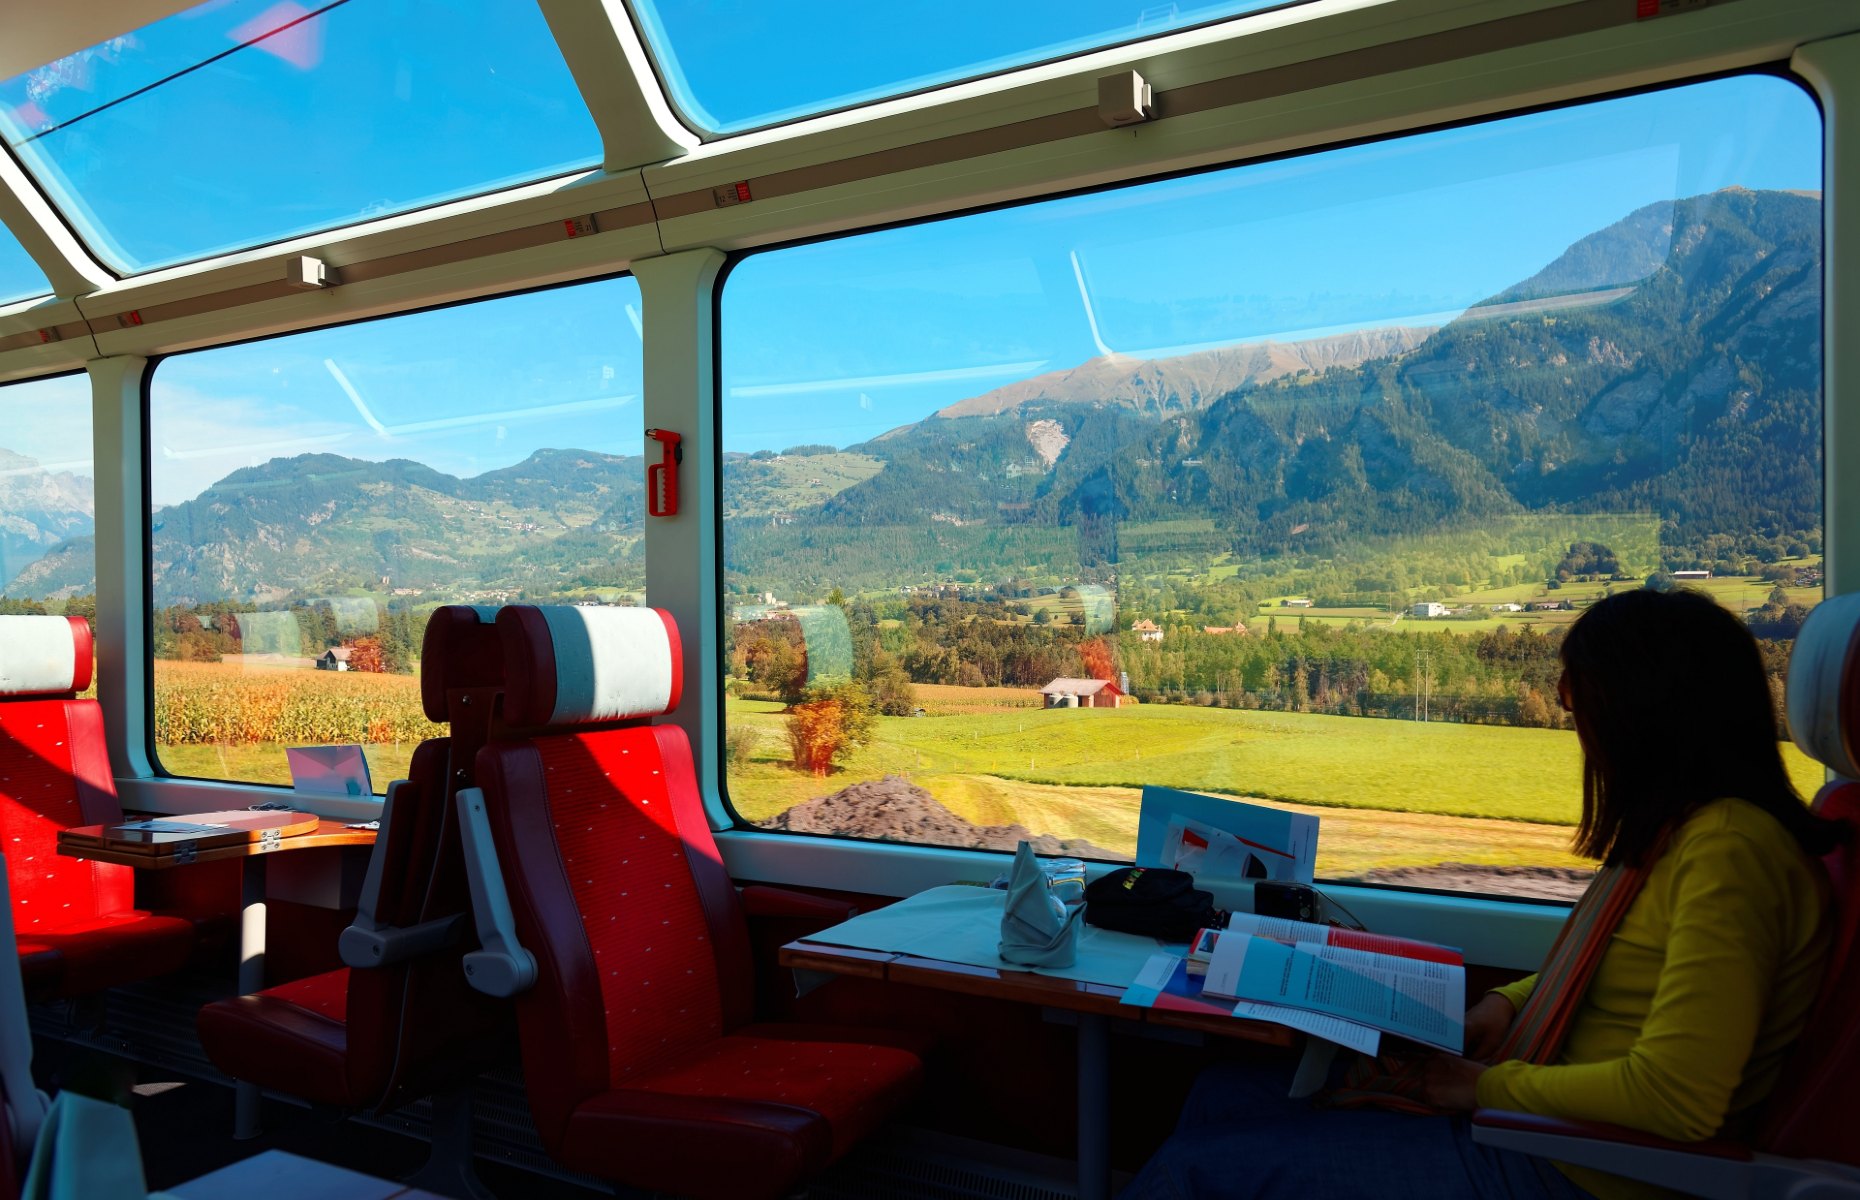 Train travel in the Swiss Alps (Image: CHEN-MIN CHUN/Shutterstock)